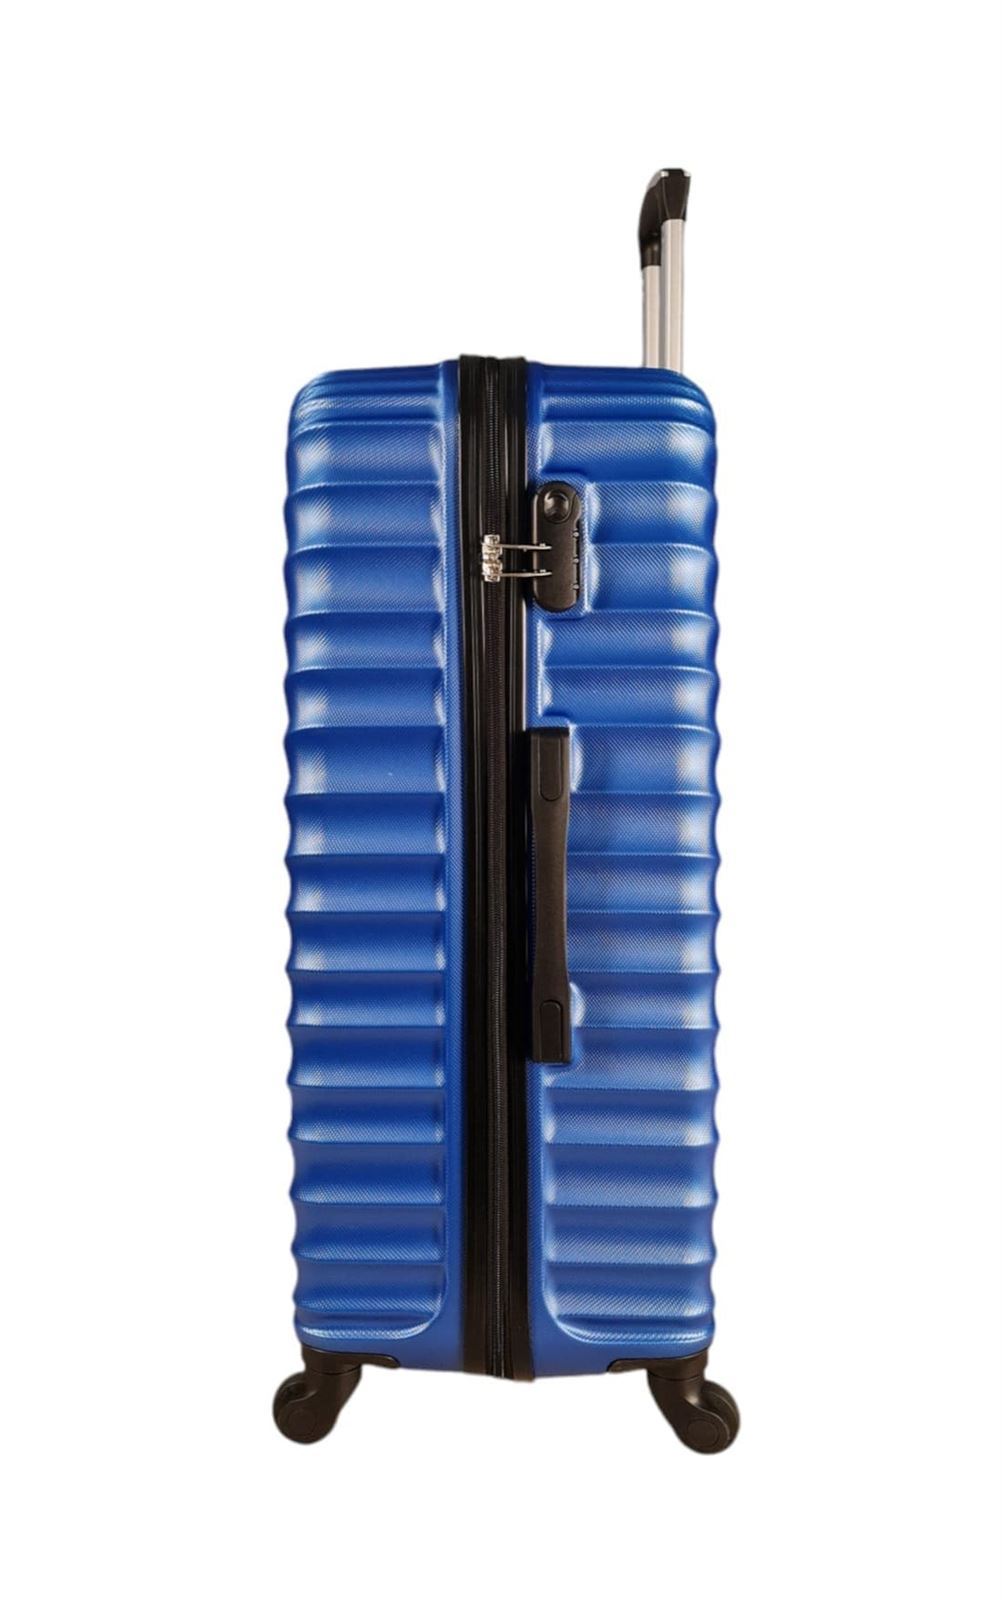 Maleta VIP Grande 75x46x30 cms Muy Ligera Barata Material ABS color Azul - Imagen 5